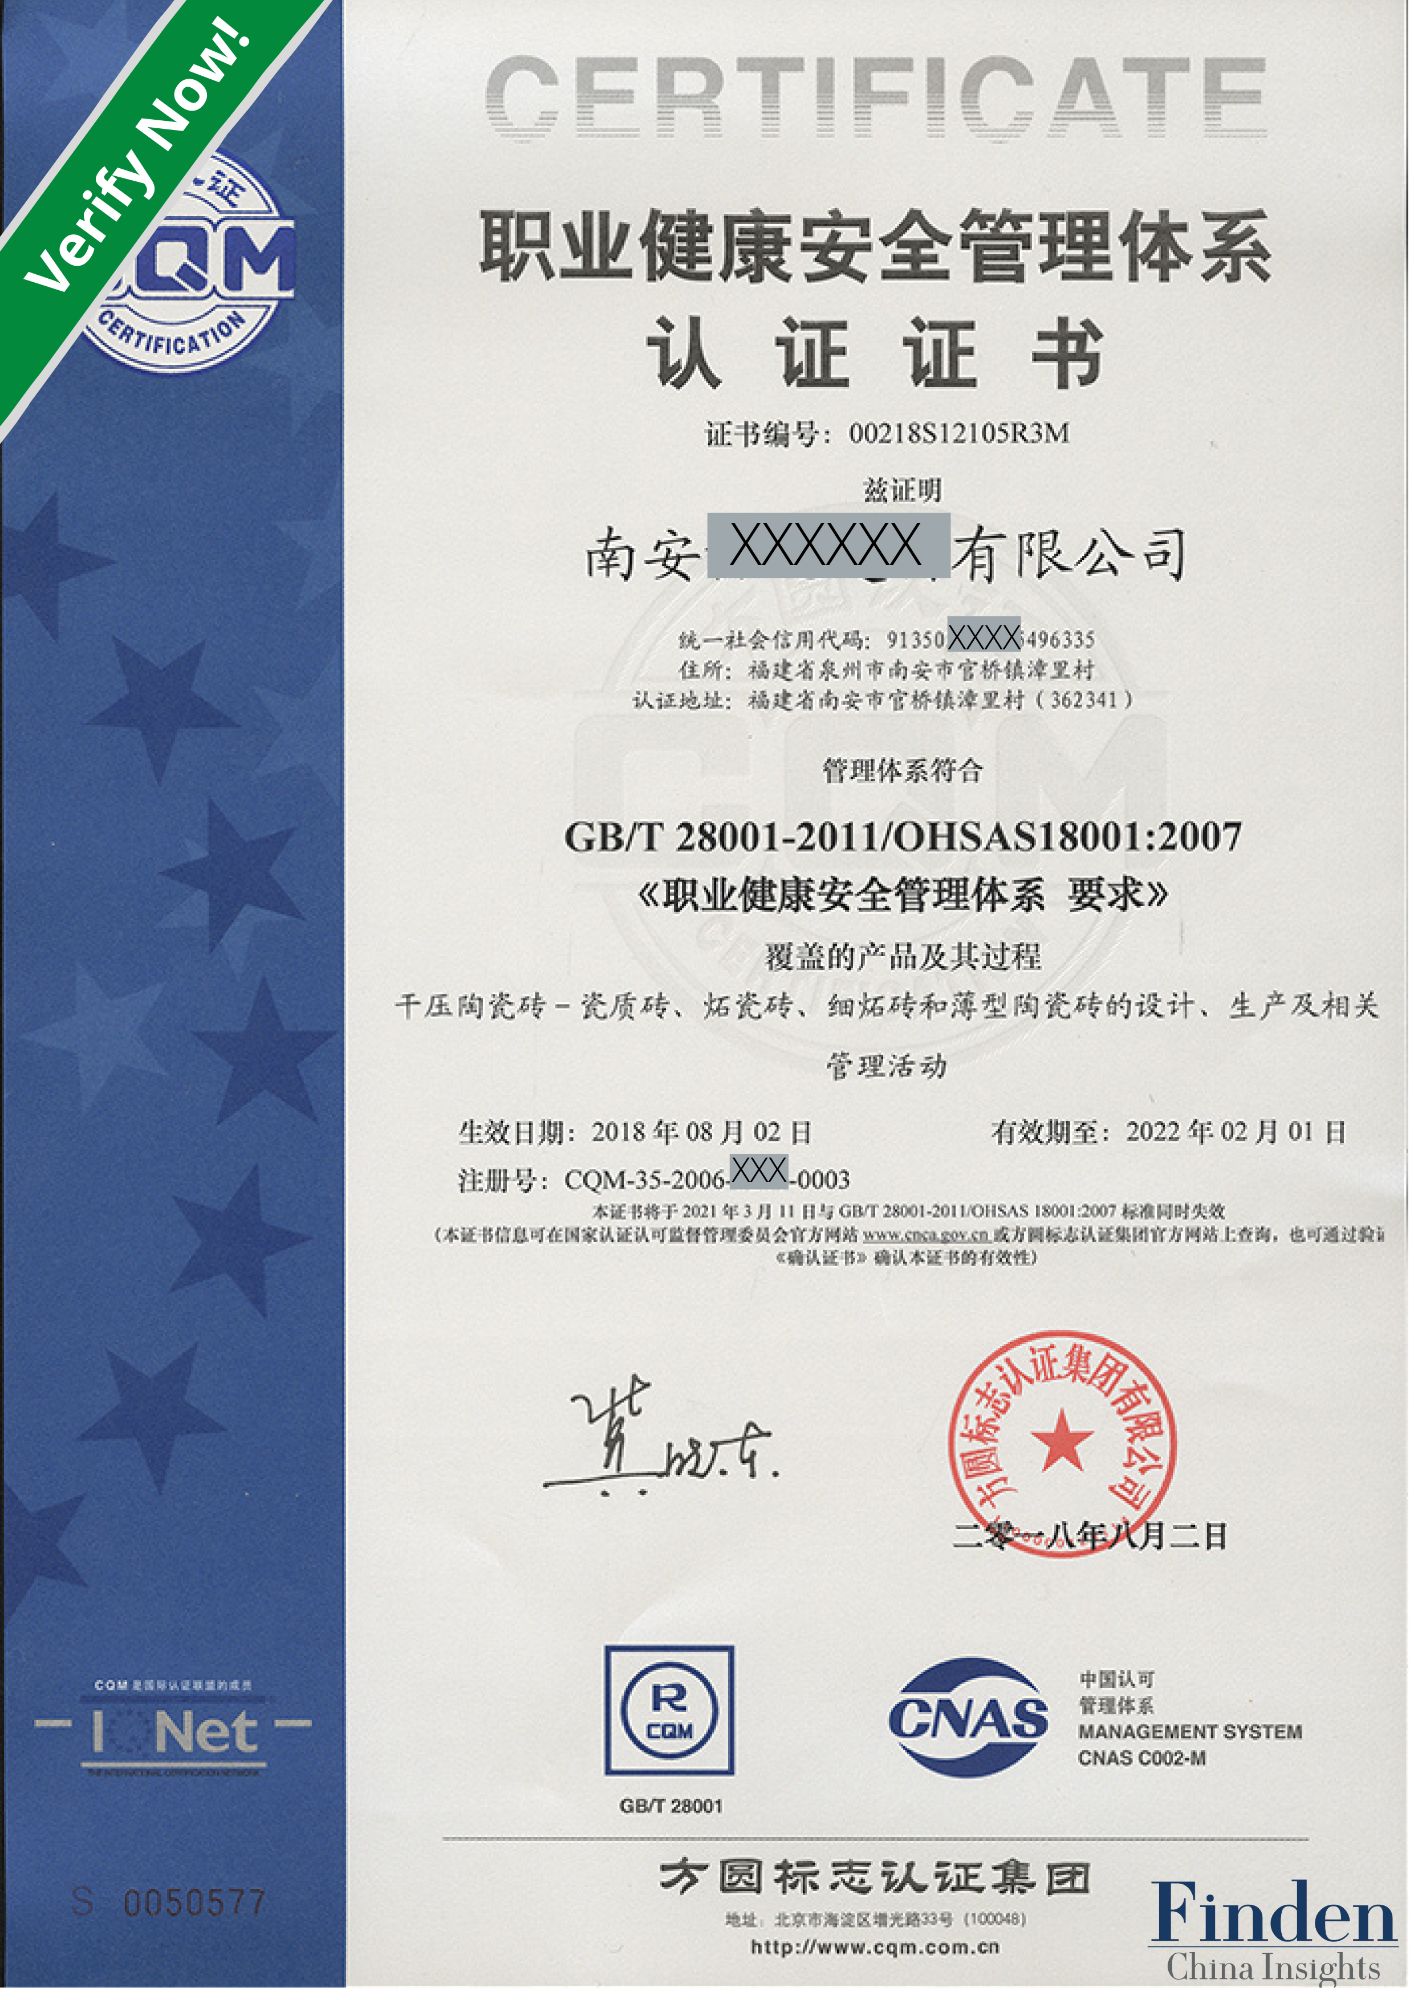 China OHSAS 18001 Certificate Verification